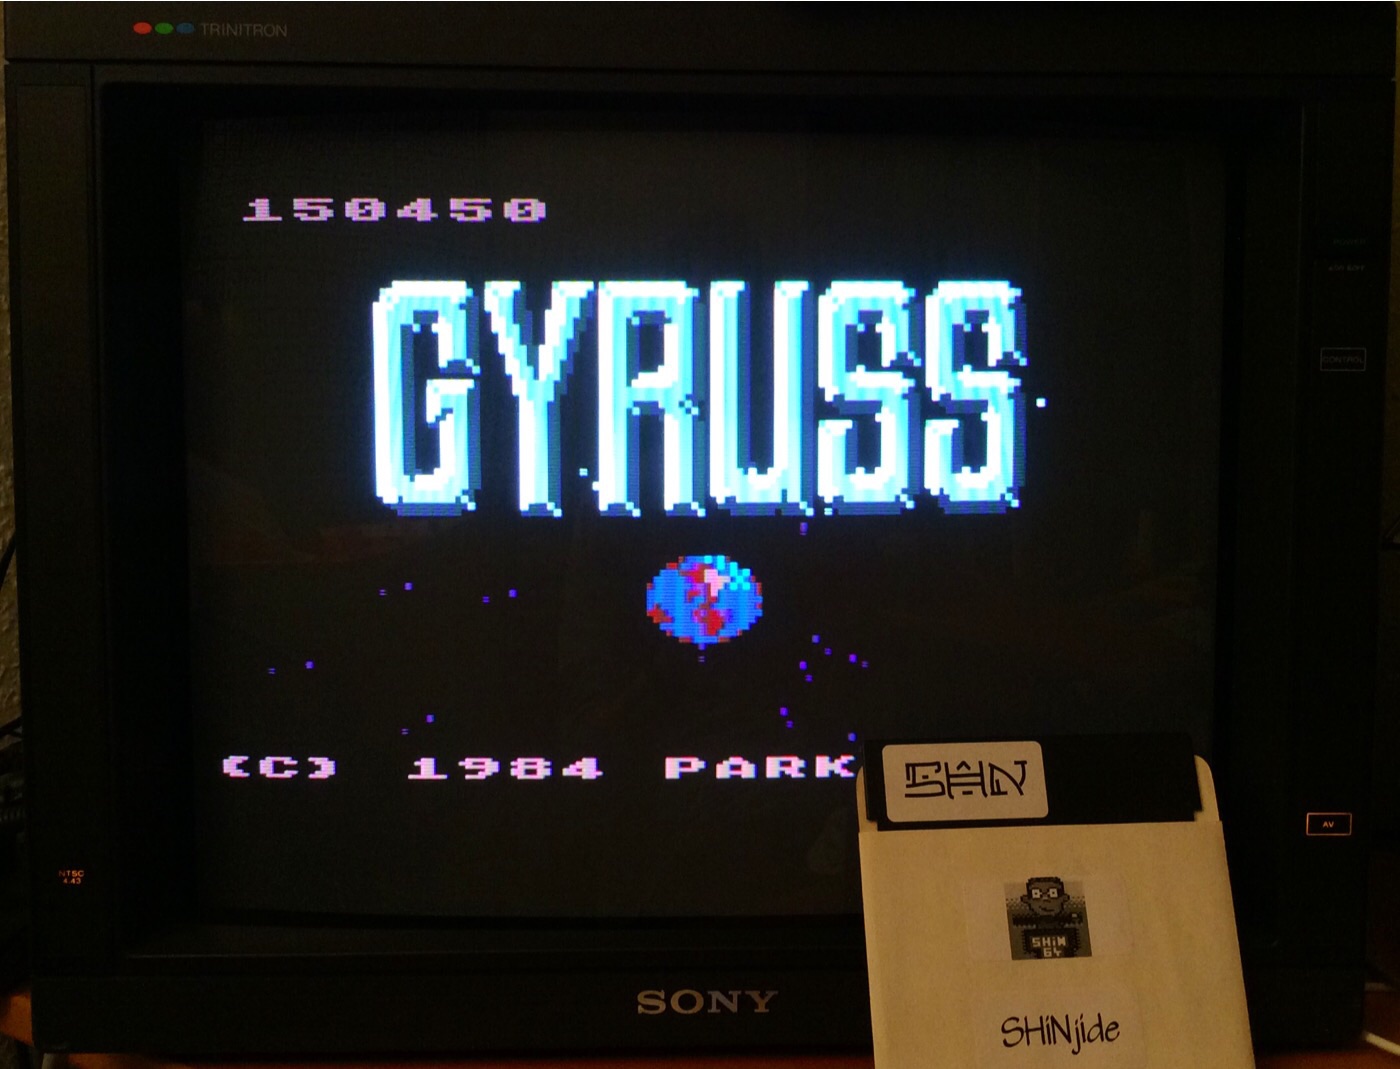 SHiNjide: Gyruss (Atari 400/800/XL/XE Emulated) 150,450 points on 2014-12-19 11:13:01